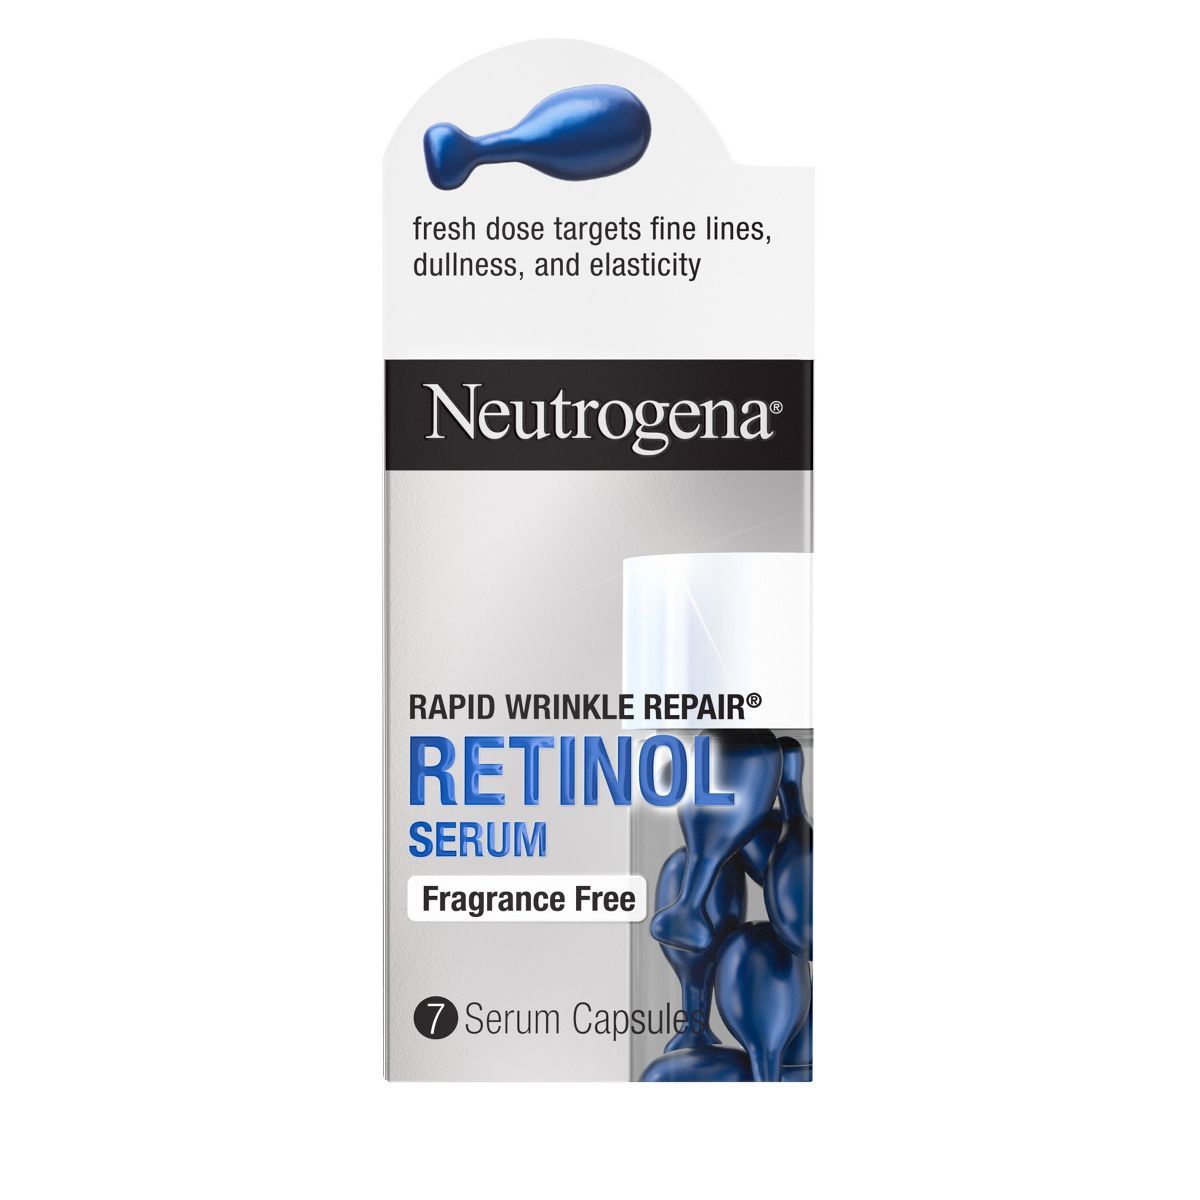 Neutrogena Rapid Wrinkle Repair Retinol Face Serum Capsules - 7ct | Target